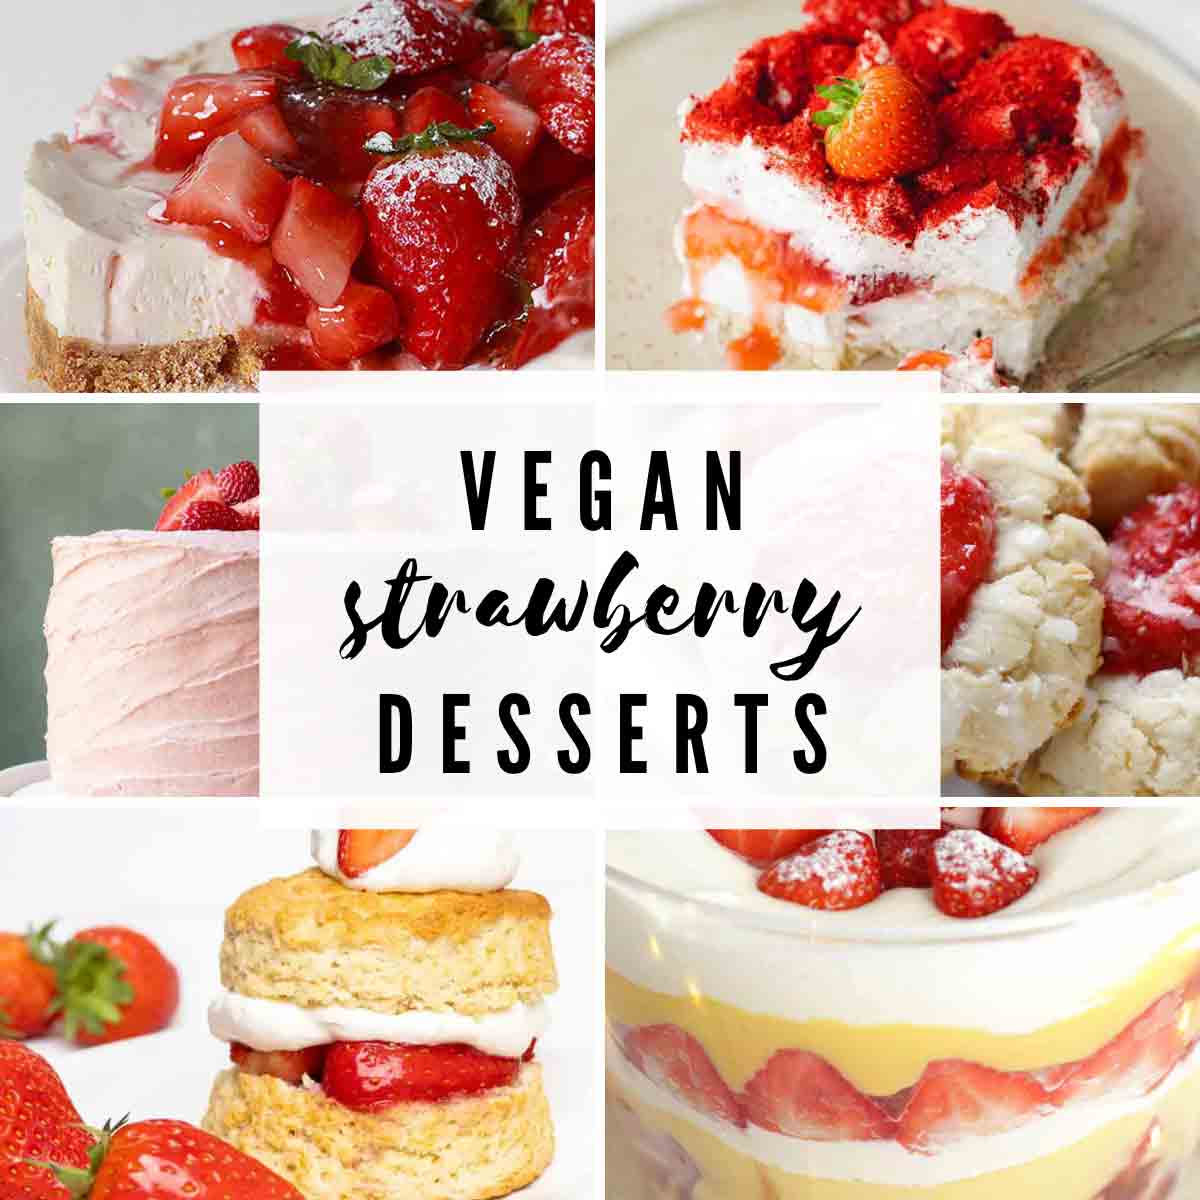 6 Images Of Vegan Strawberry Desserts